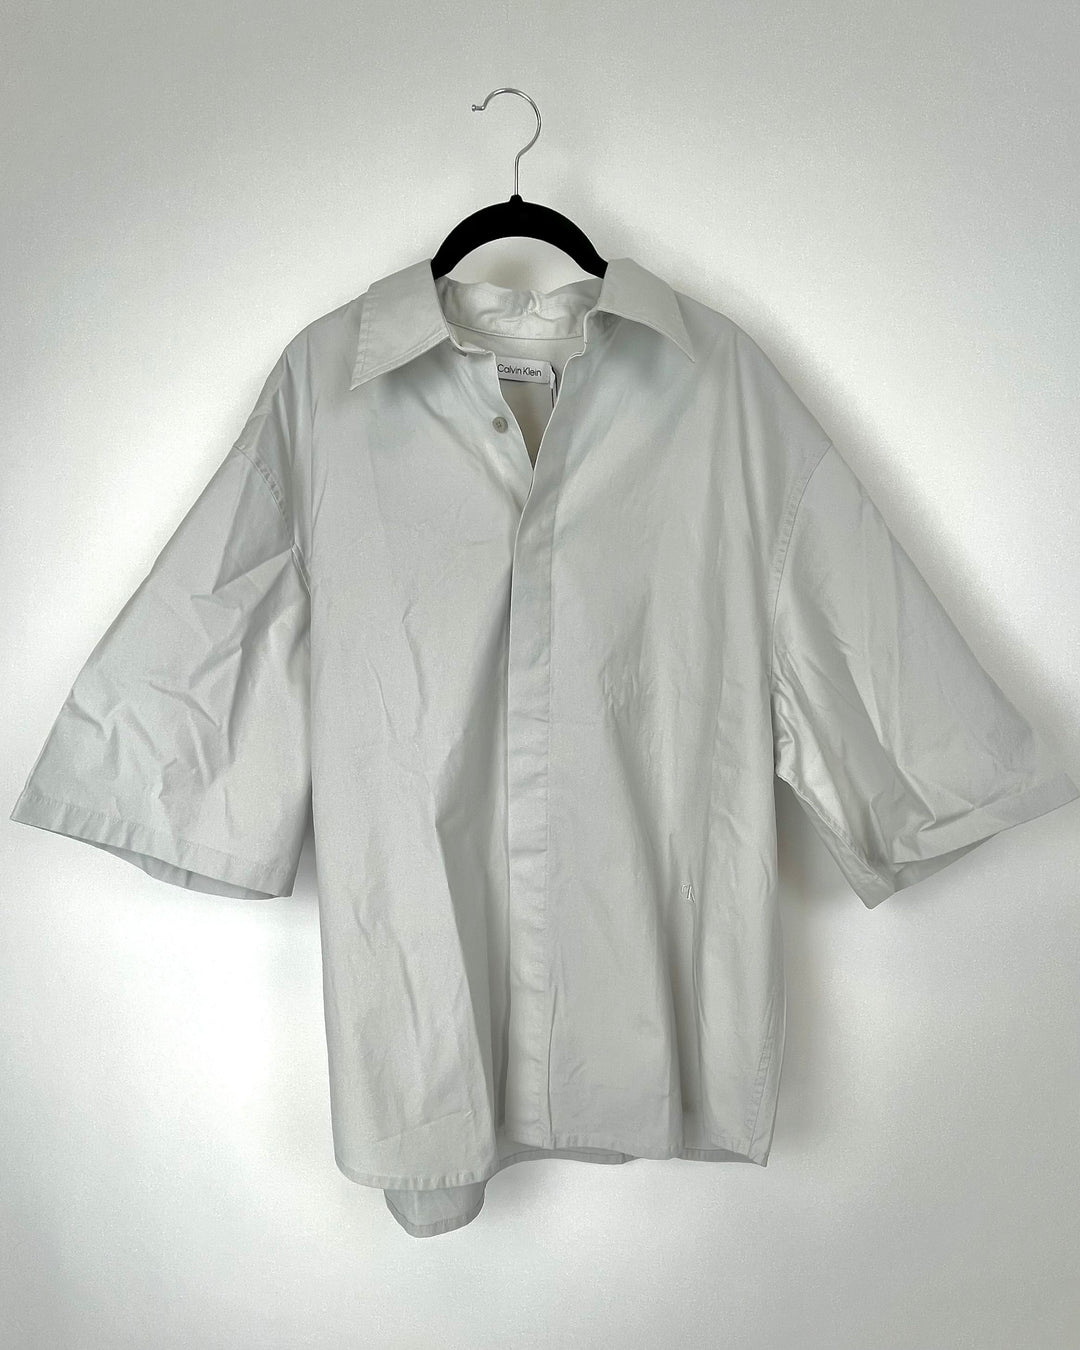 MENS Light Gray Half Sleeve Button Up Shirt - Medium